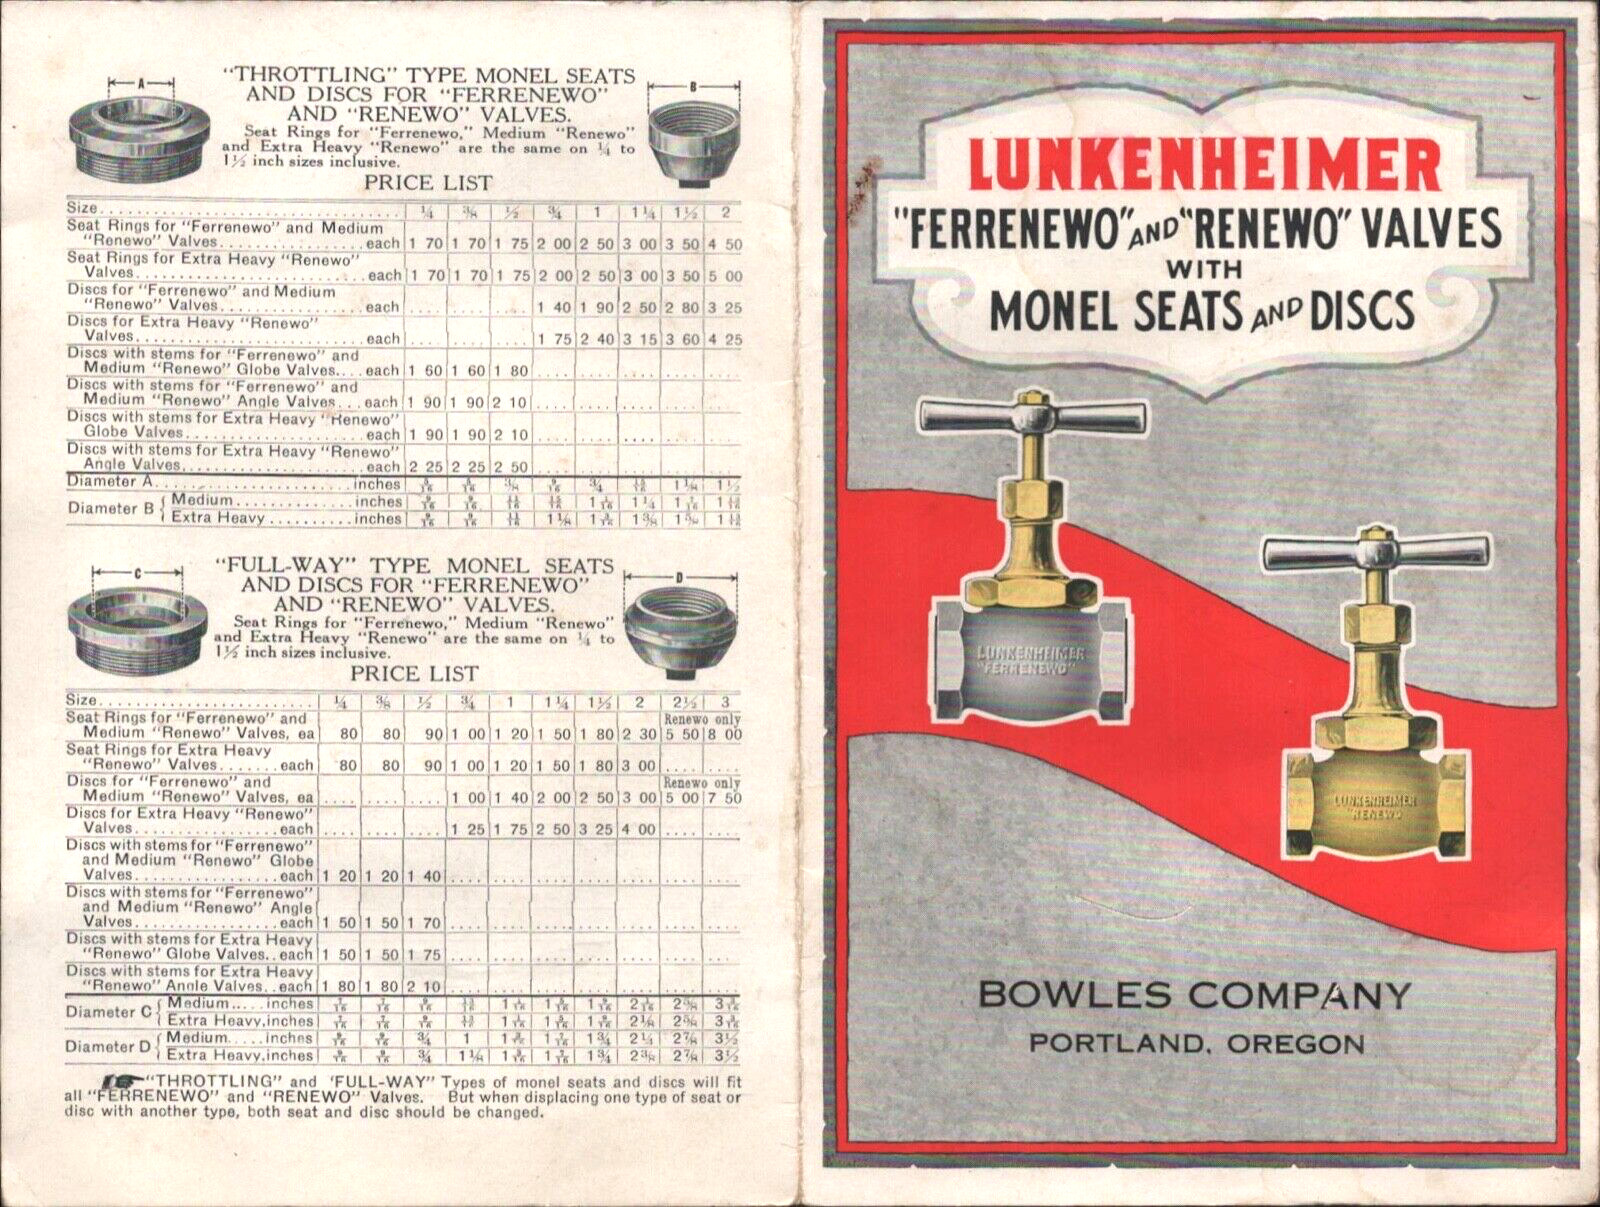 1920s LUNKENHEIMER FERRENEWO and RENEWO VALVES industrial plant parts pamphlet